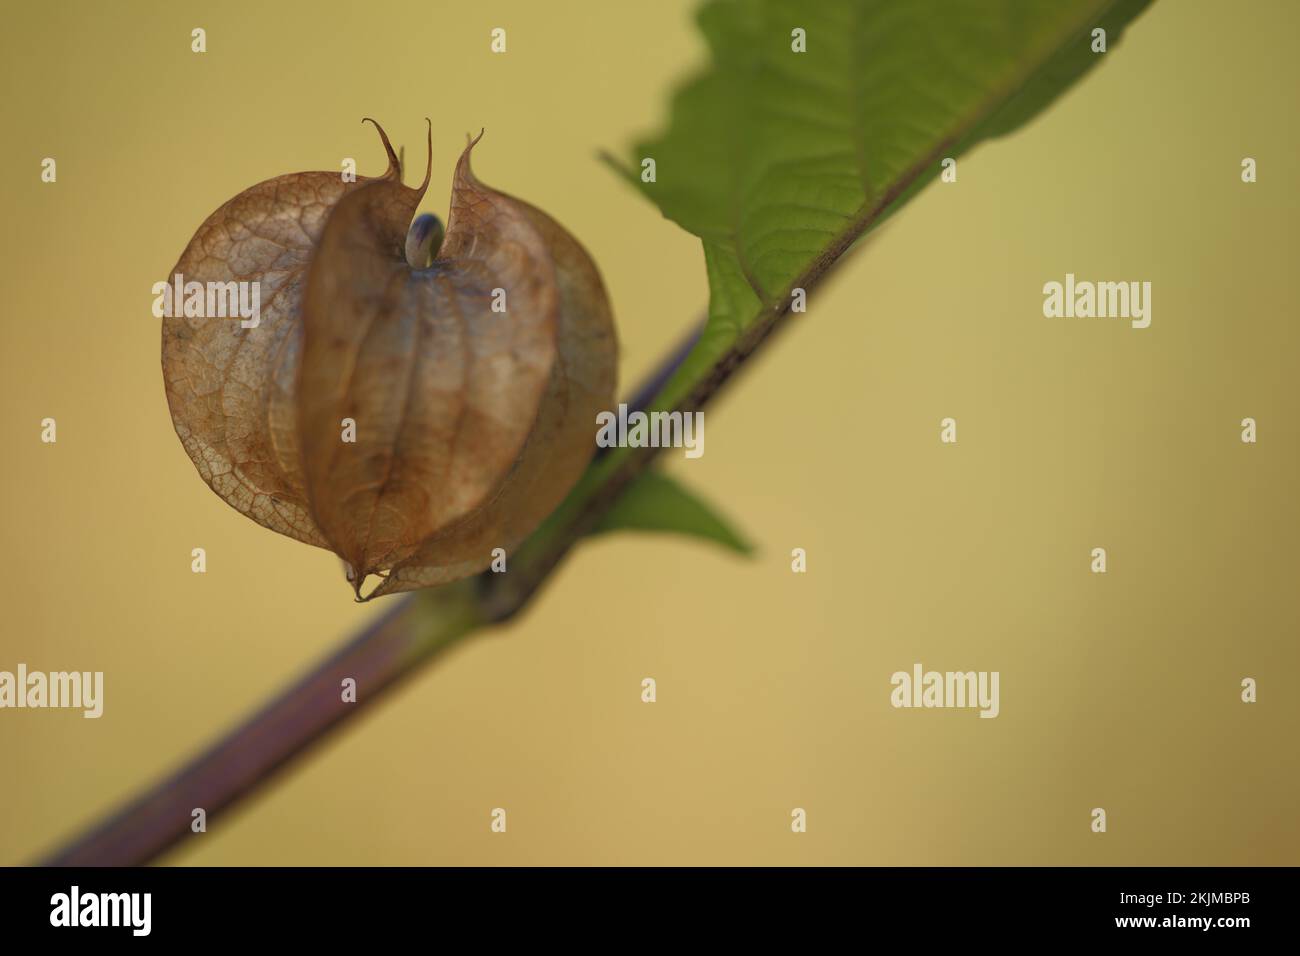 Detail of Bladder Cherry, Common Jew's Cherry, Nature, Lampion, Fruit Capsule, Fruit, japanese-lantern (Physalis alkekengi), Jew's Cherry, Poisonous P Stock Photo